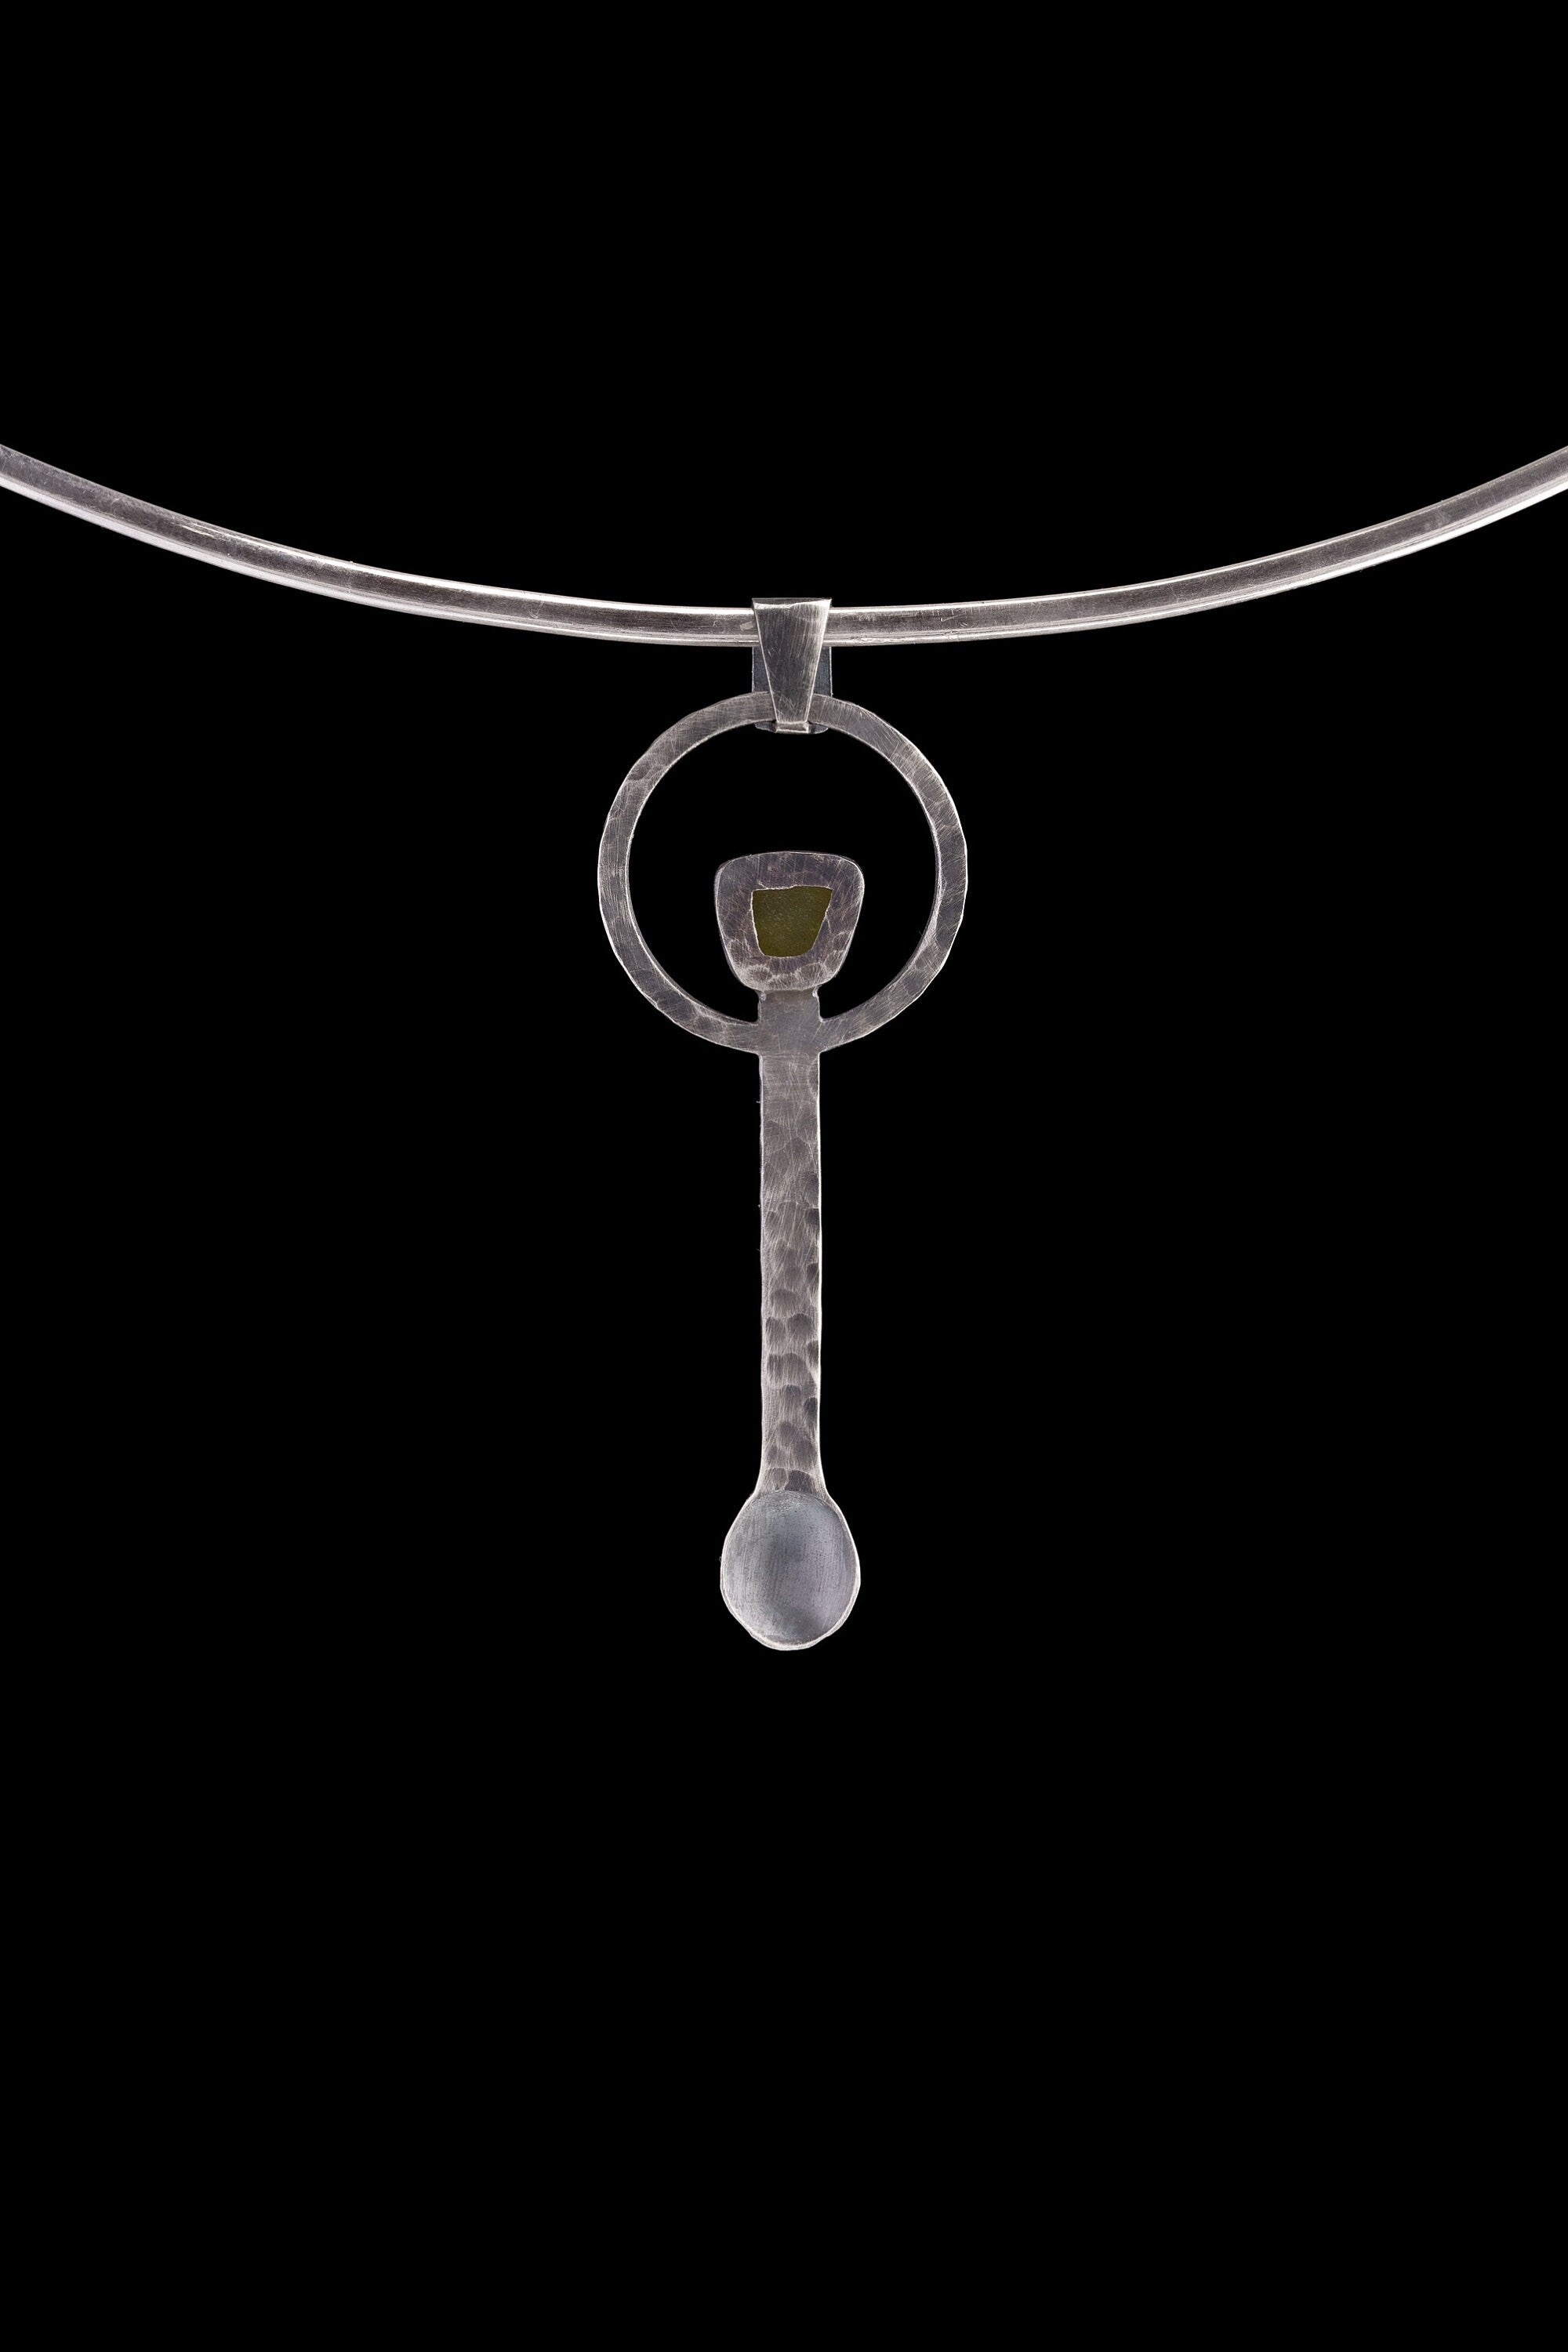 Australian Peridot - Spice / Ceremonial Spoon - 925 Cast Silver - Oxidised Hammer Textured - Crystal Pendant Necklace